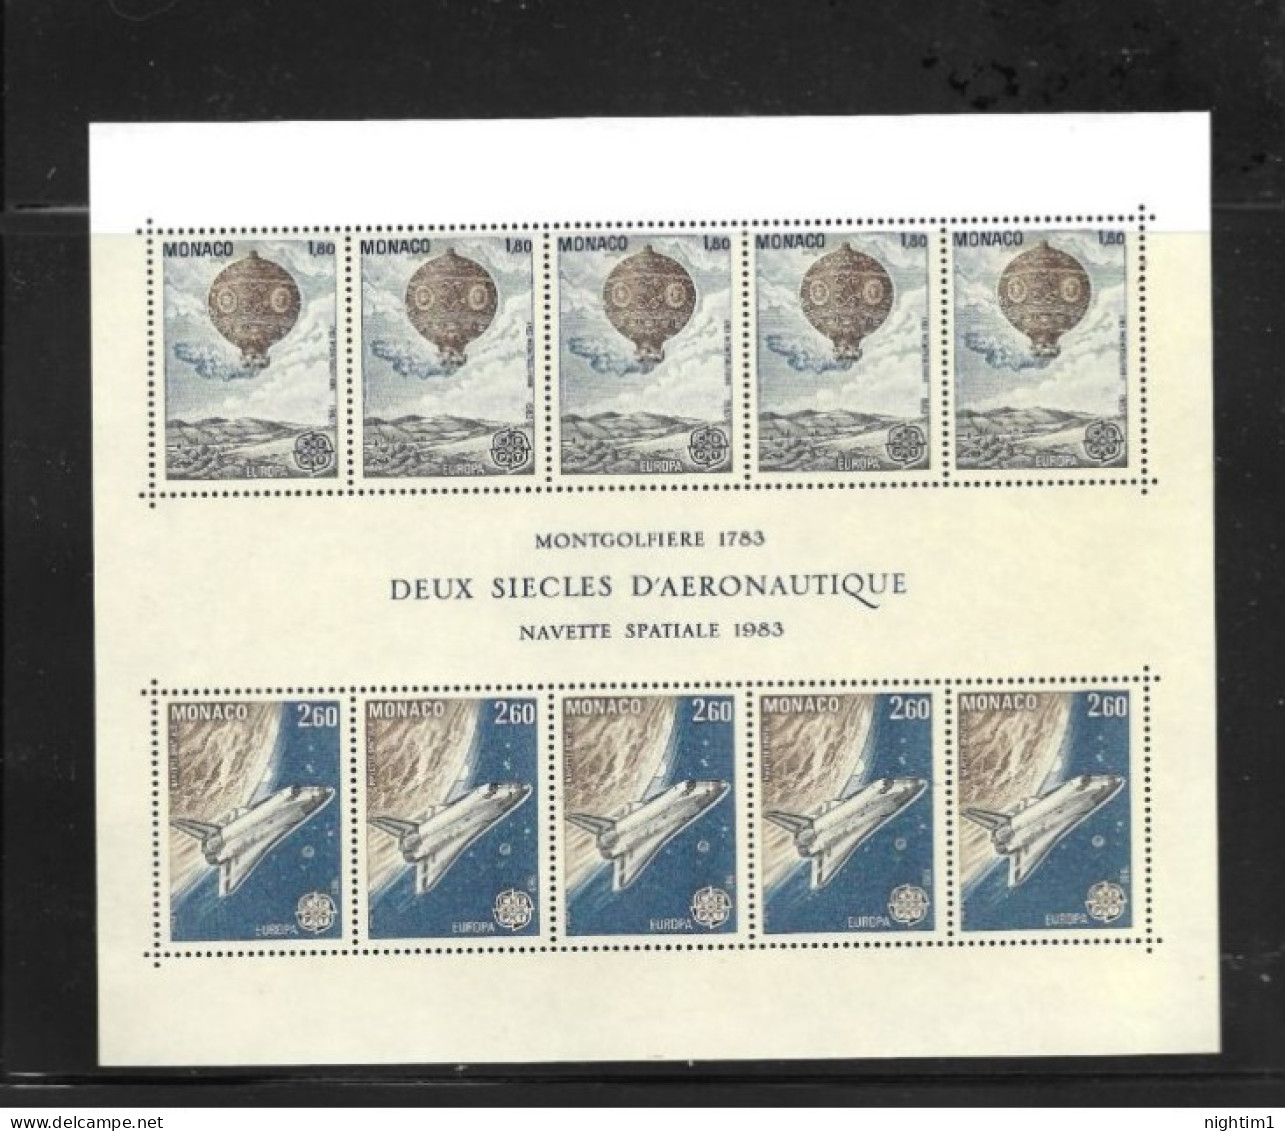 MONACO COLLECTION.  1983 DEUX SIECLES D'AERONAUTIQUE MINIATURE SHEET. UNMOUNTED MINT. - Unused Stamps